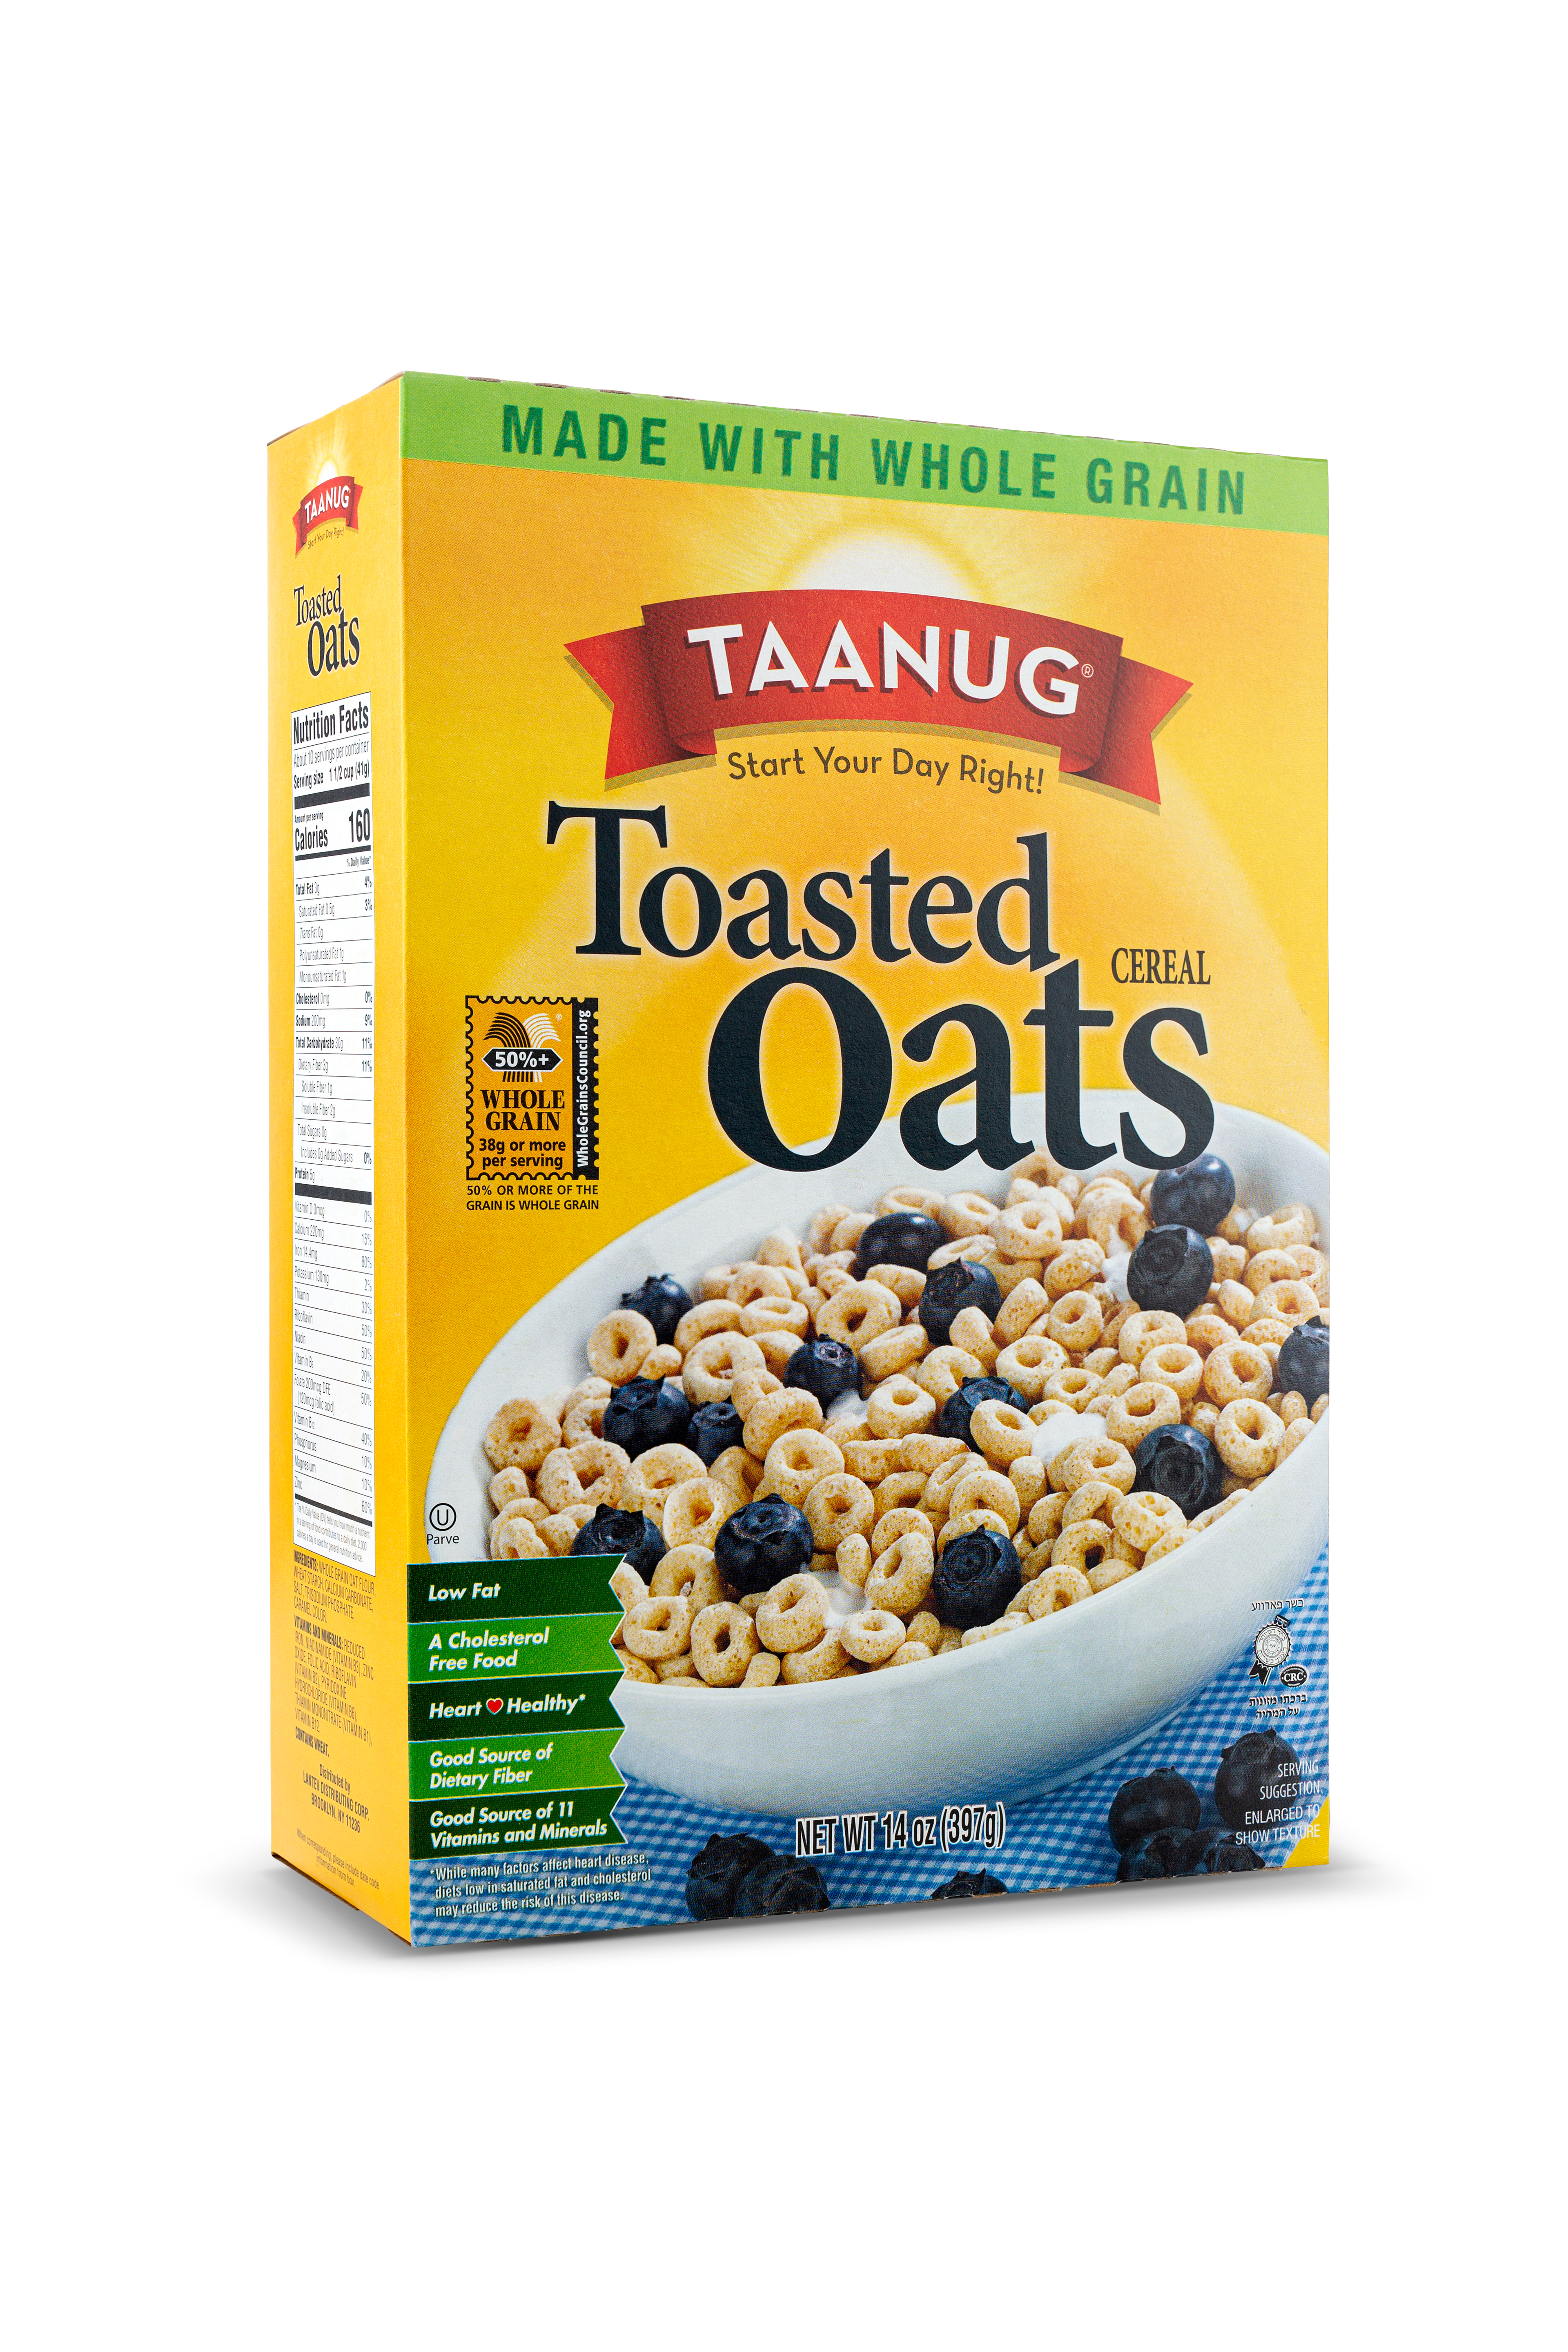 Taanug Toasted Oats Cereal 12 units per case 14.0 oz